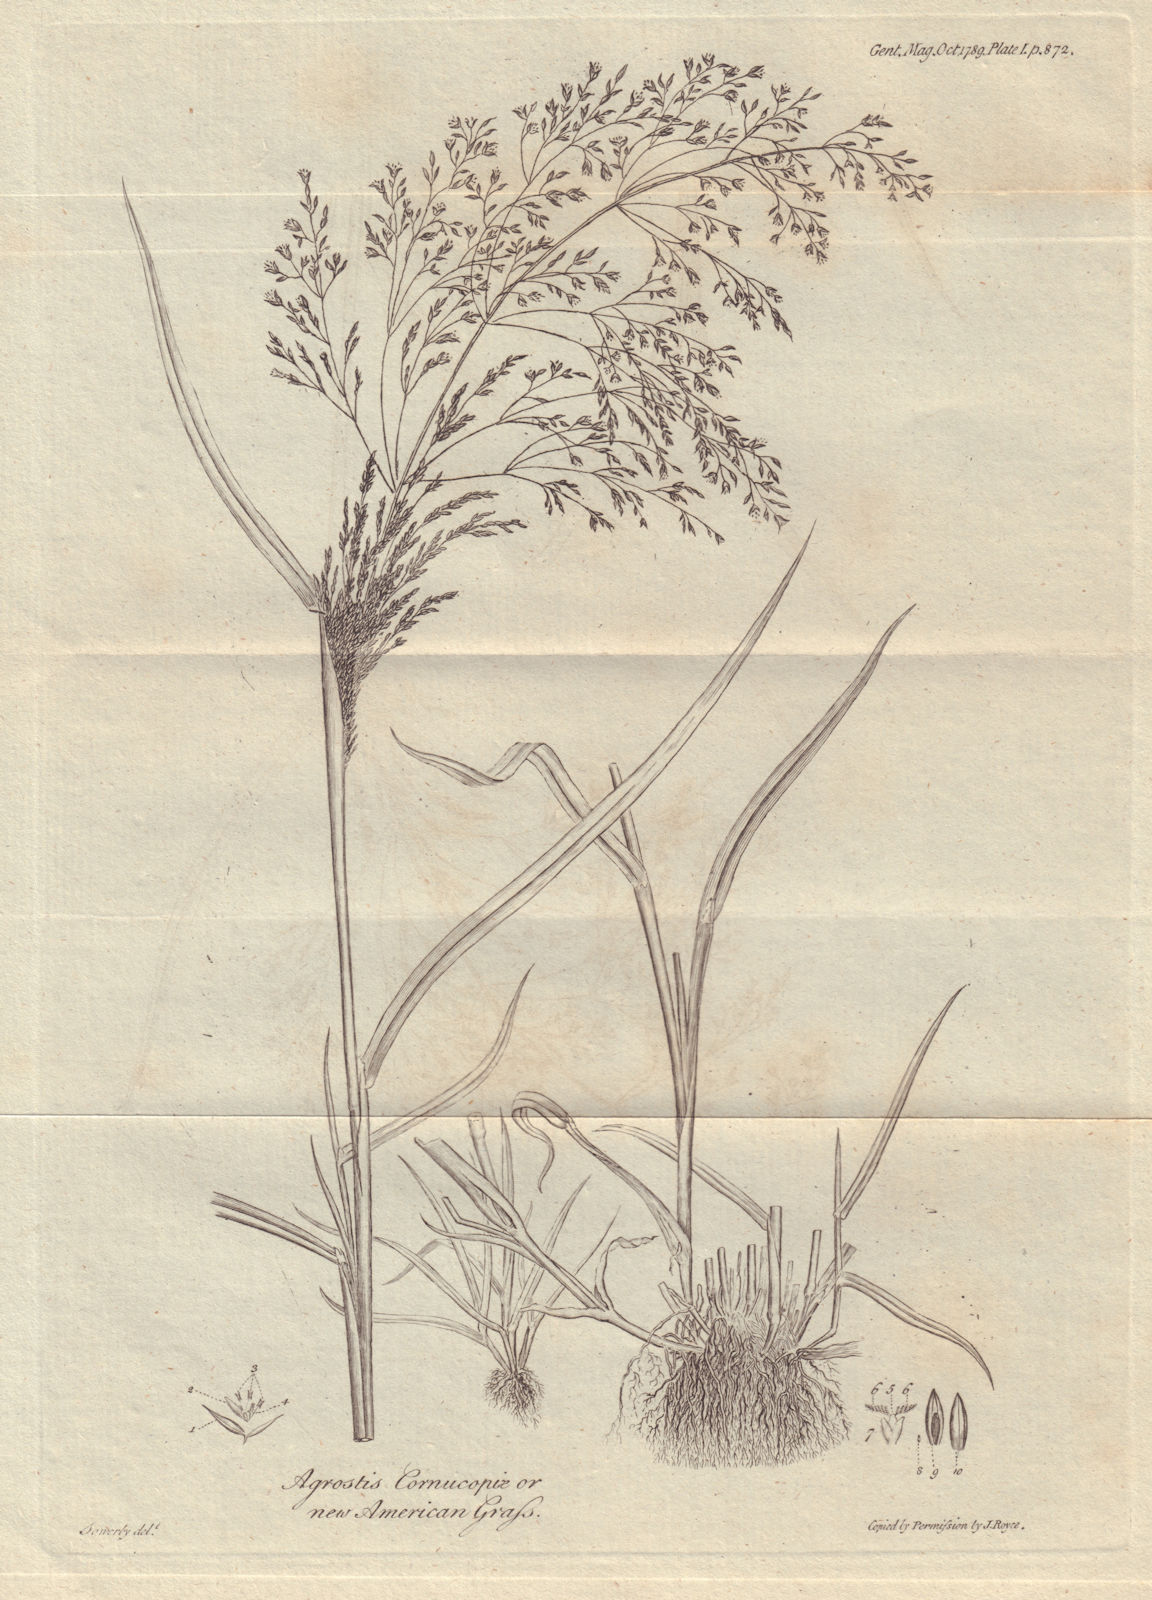 Agrostis Cornucopiae or new American Grass. Carolina Grass Plant 1789 print